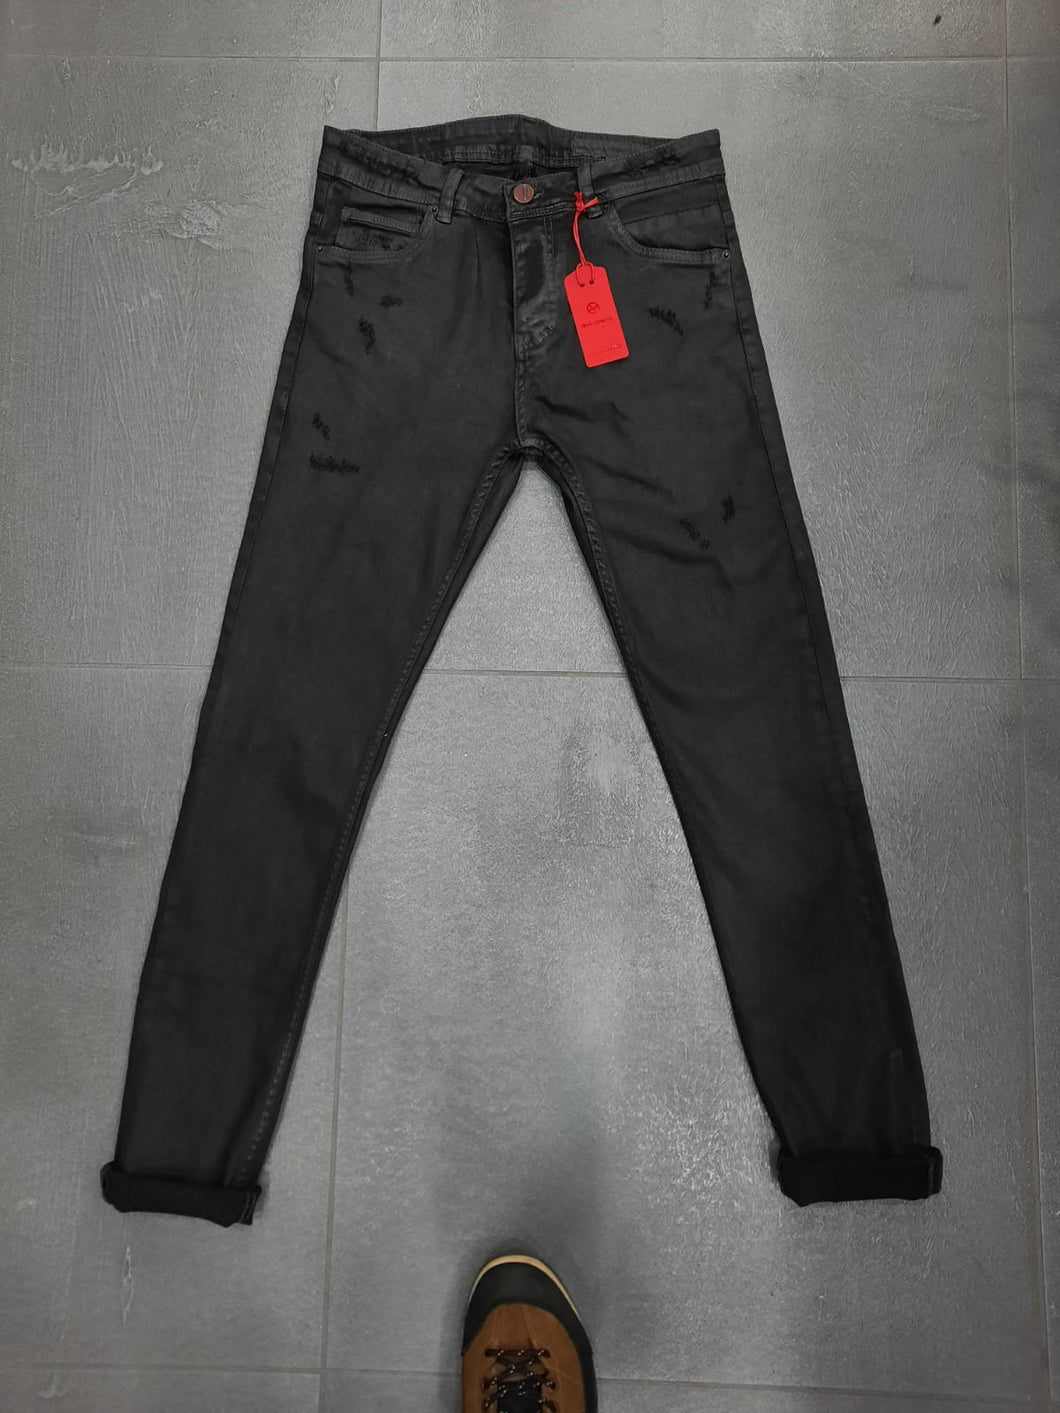 PE 6907 Ex Pent Waxed Jeans: Black